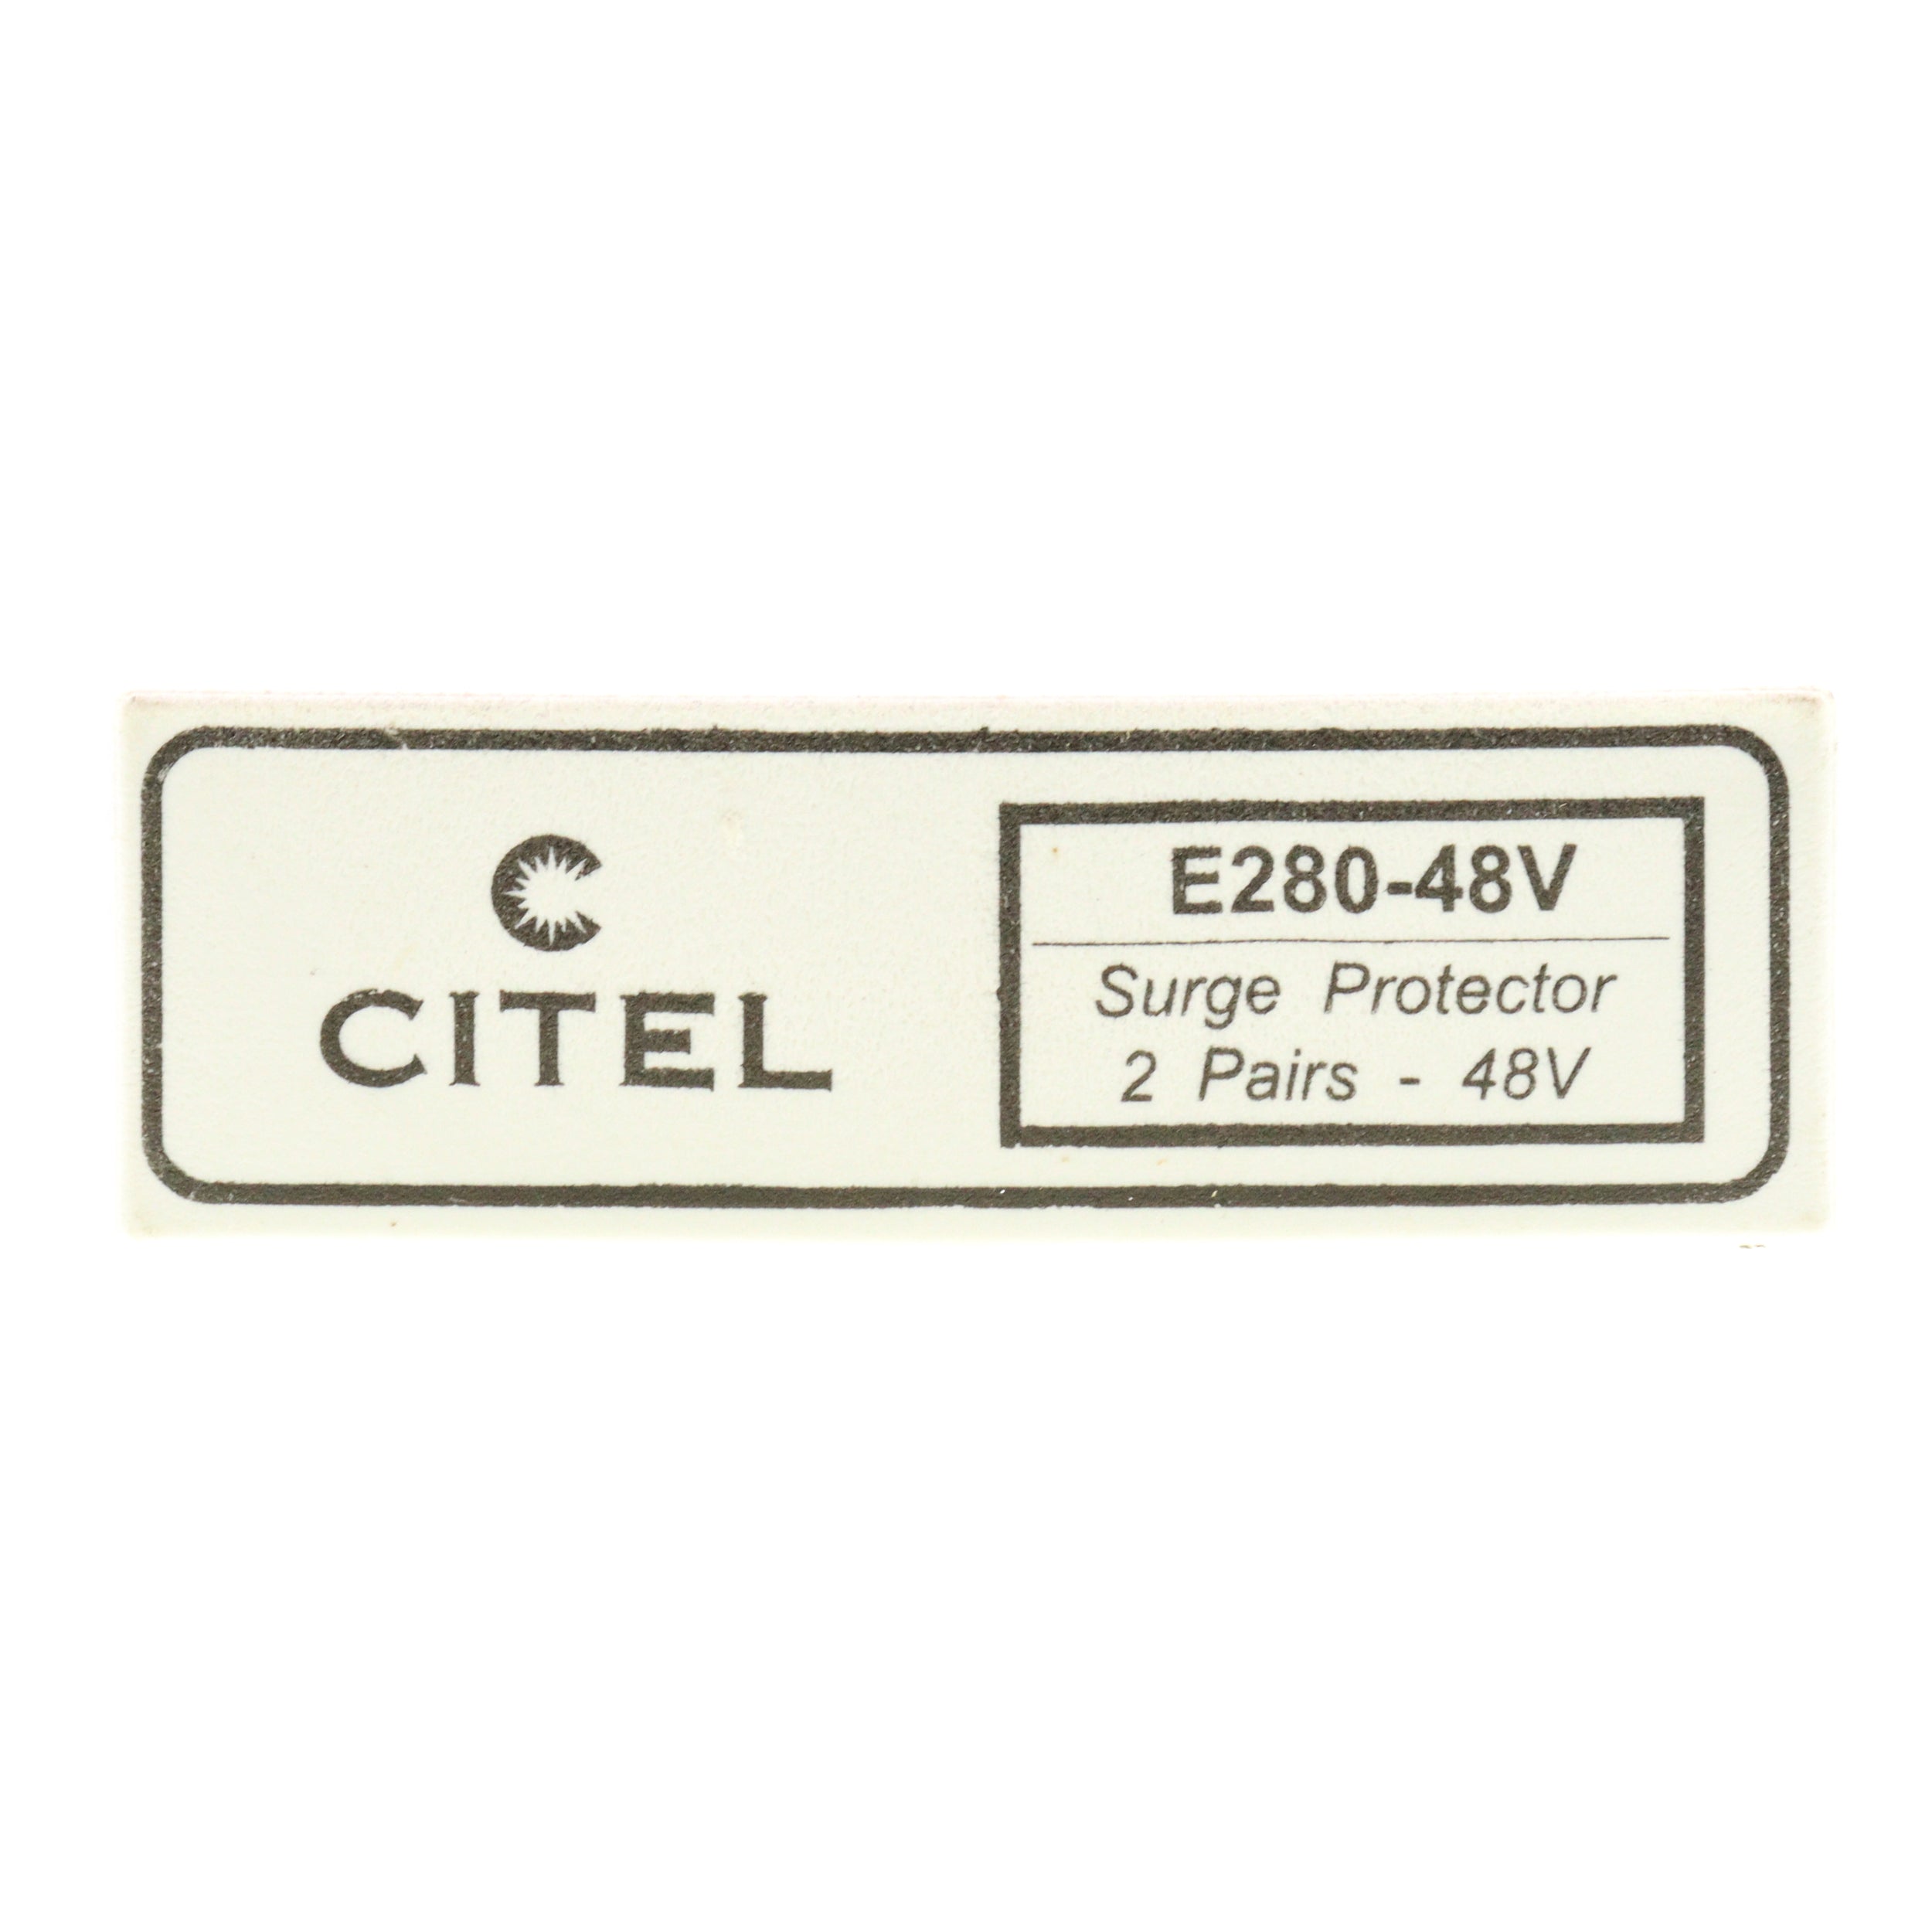 Citel, CITEL E280-48V ISOLATED LOOP SURGE PROTECTOR SPD, PIN MOUNT, 48V